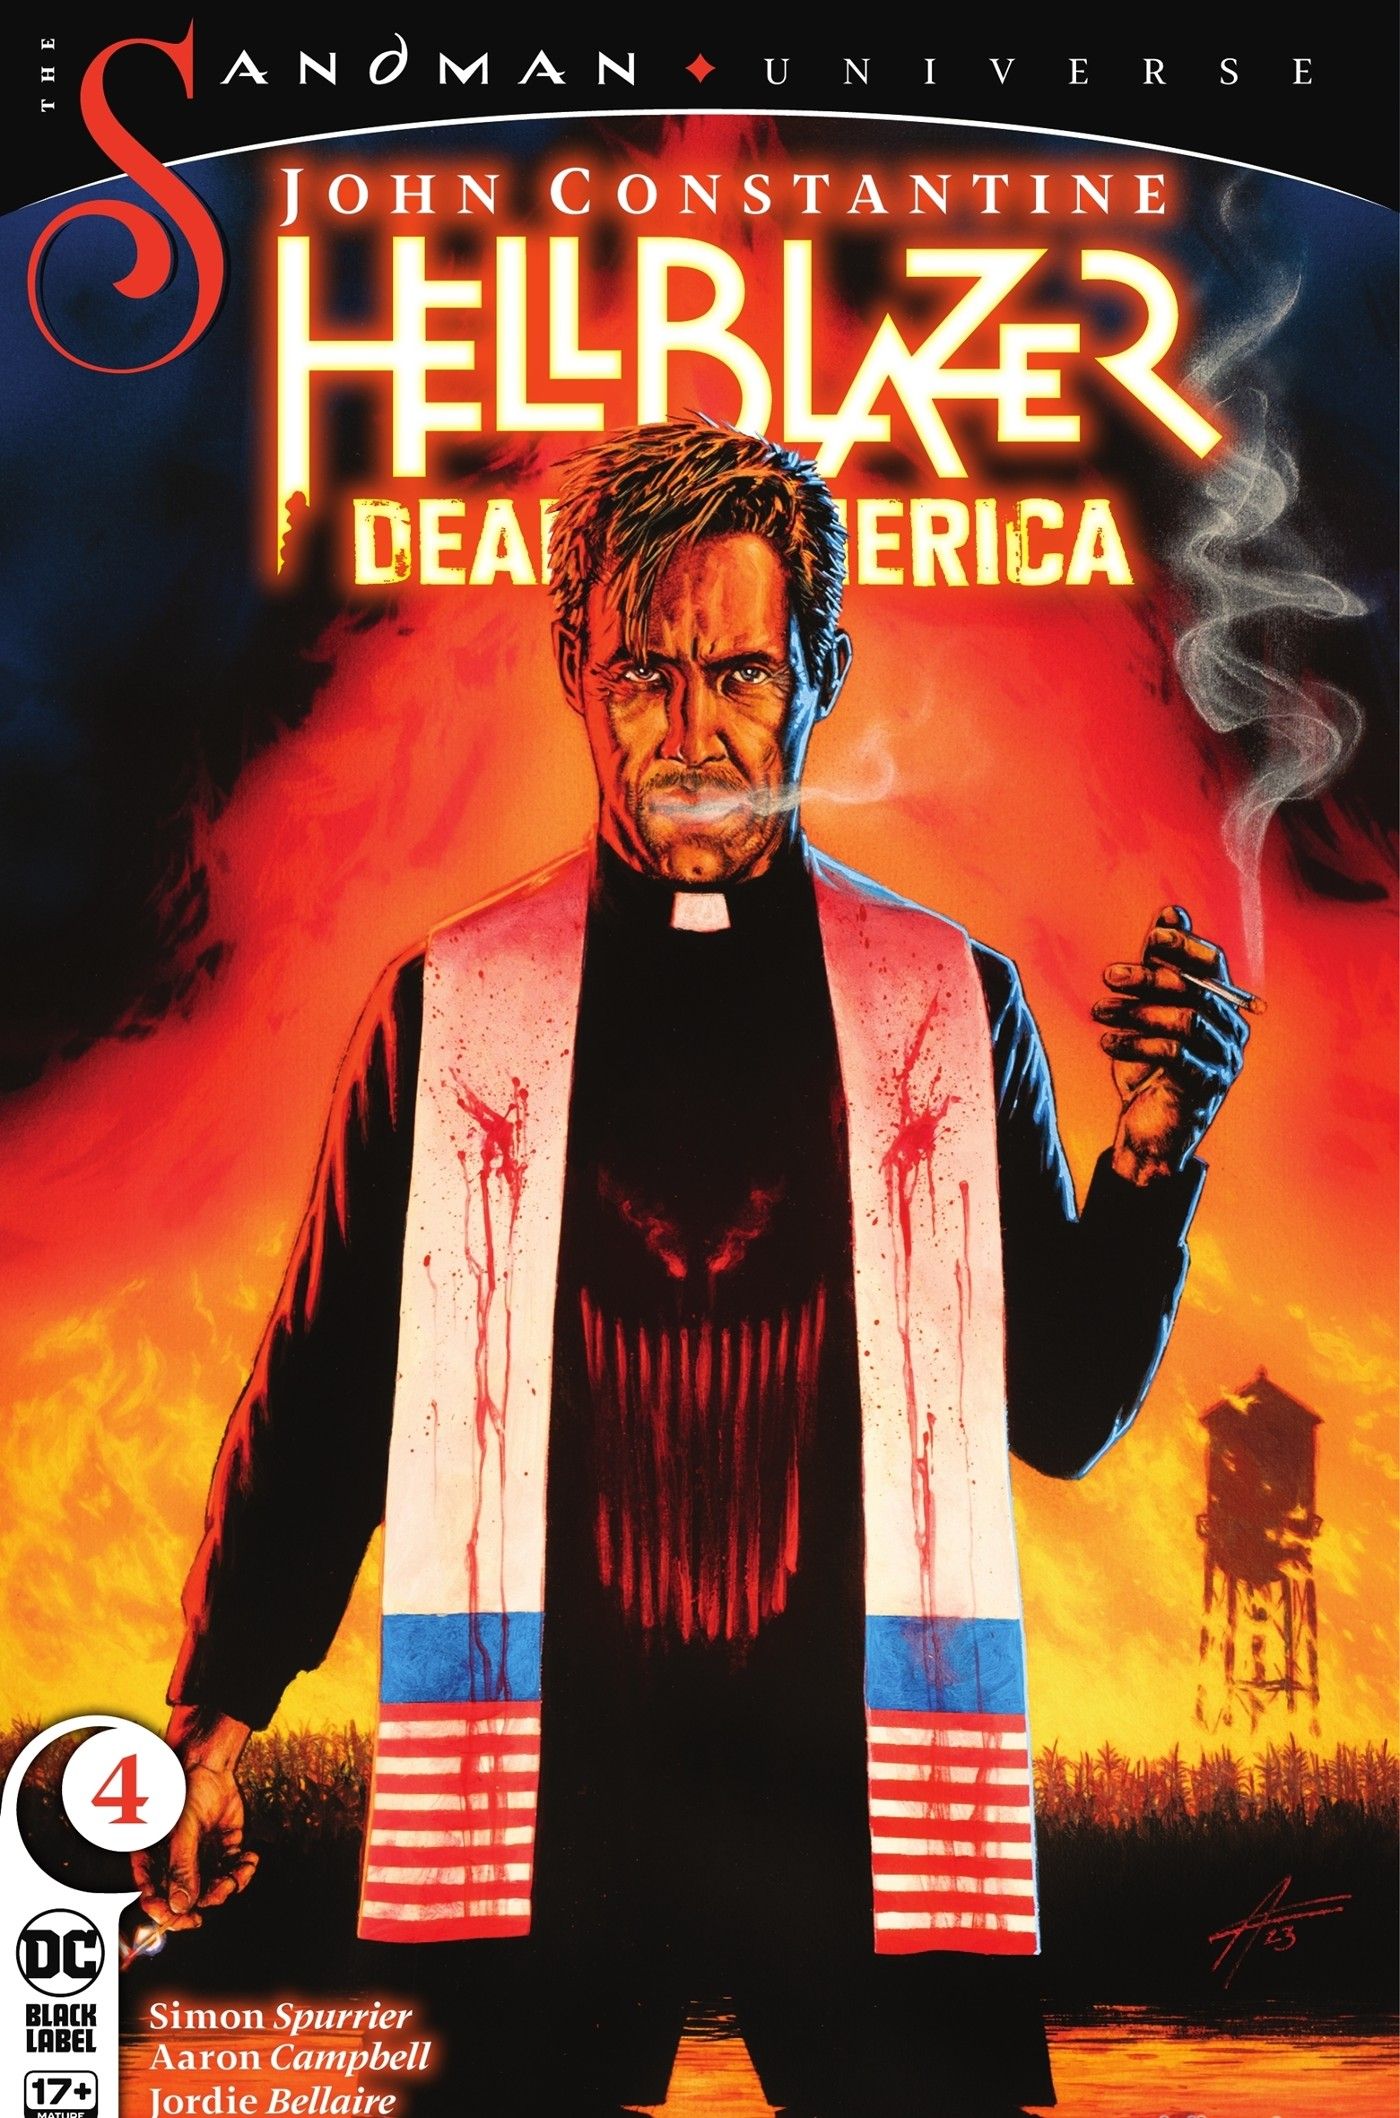 John Constantine Hellblazer Dead in America 4 COVER